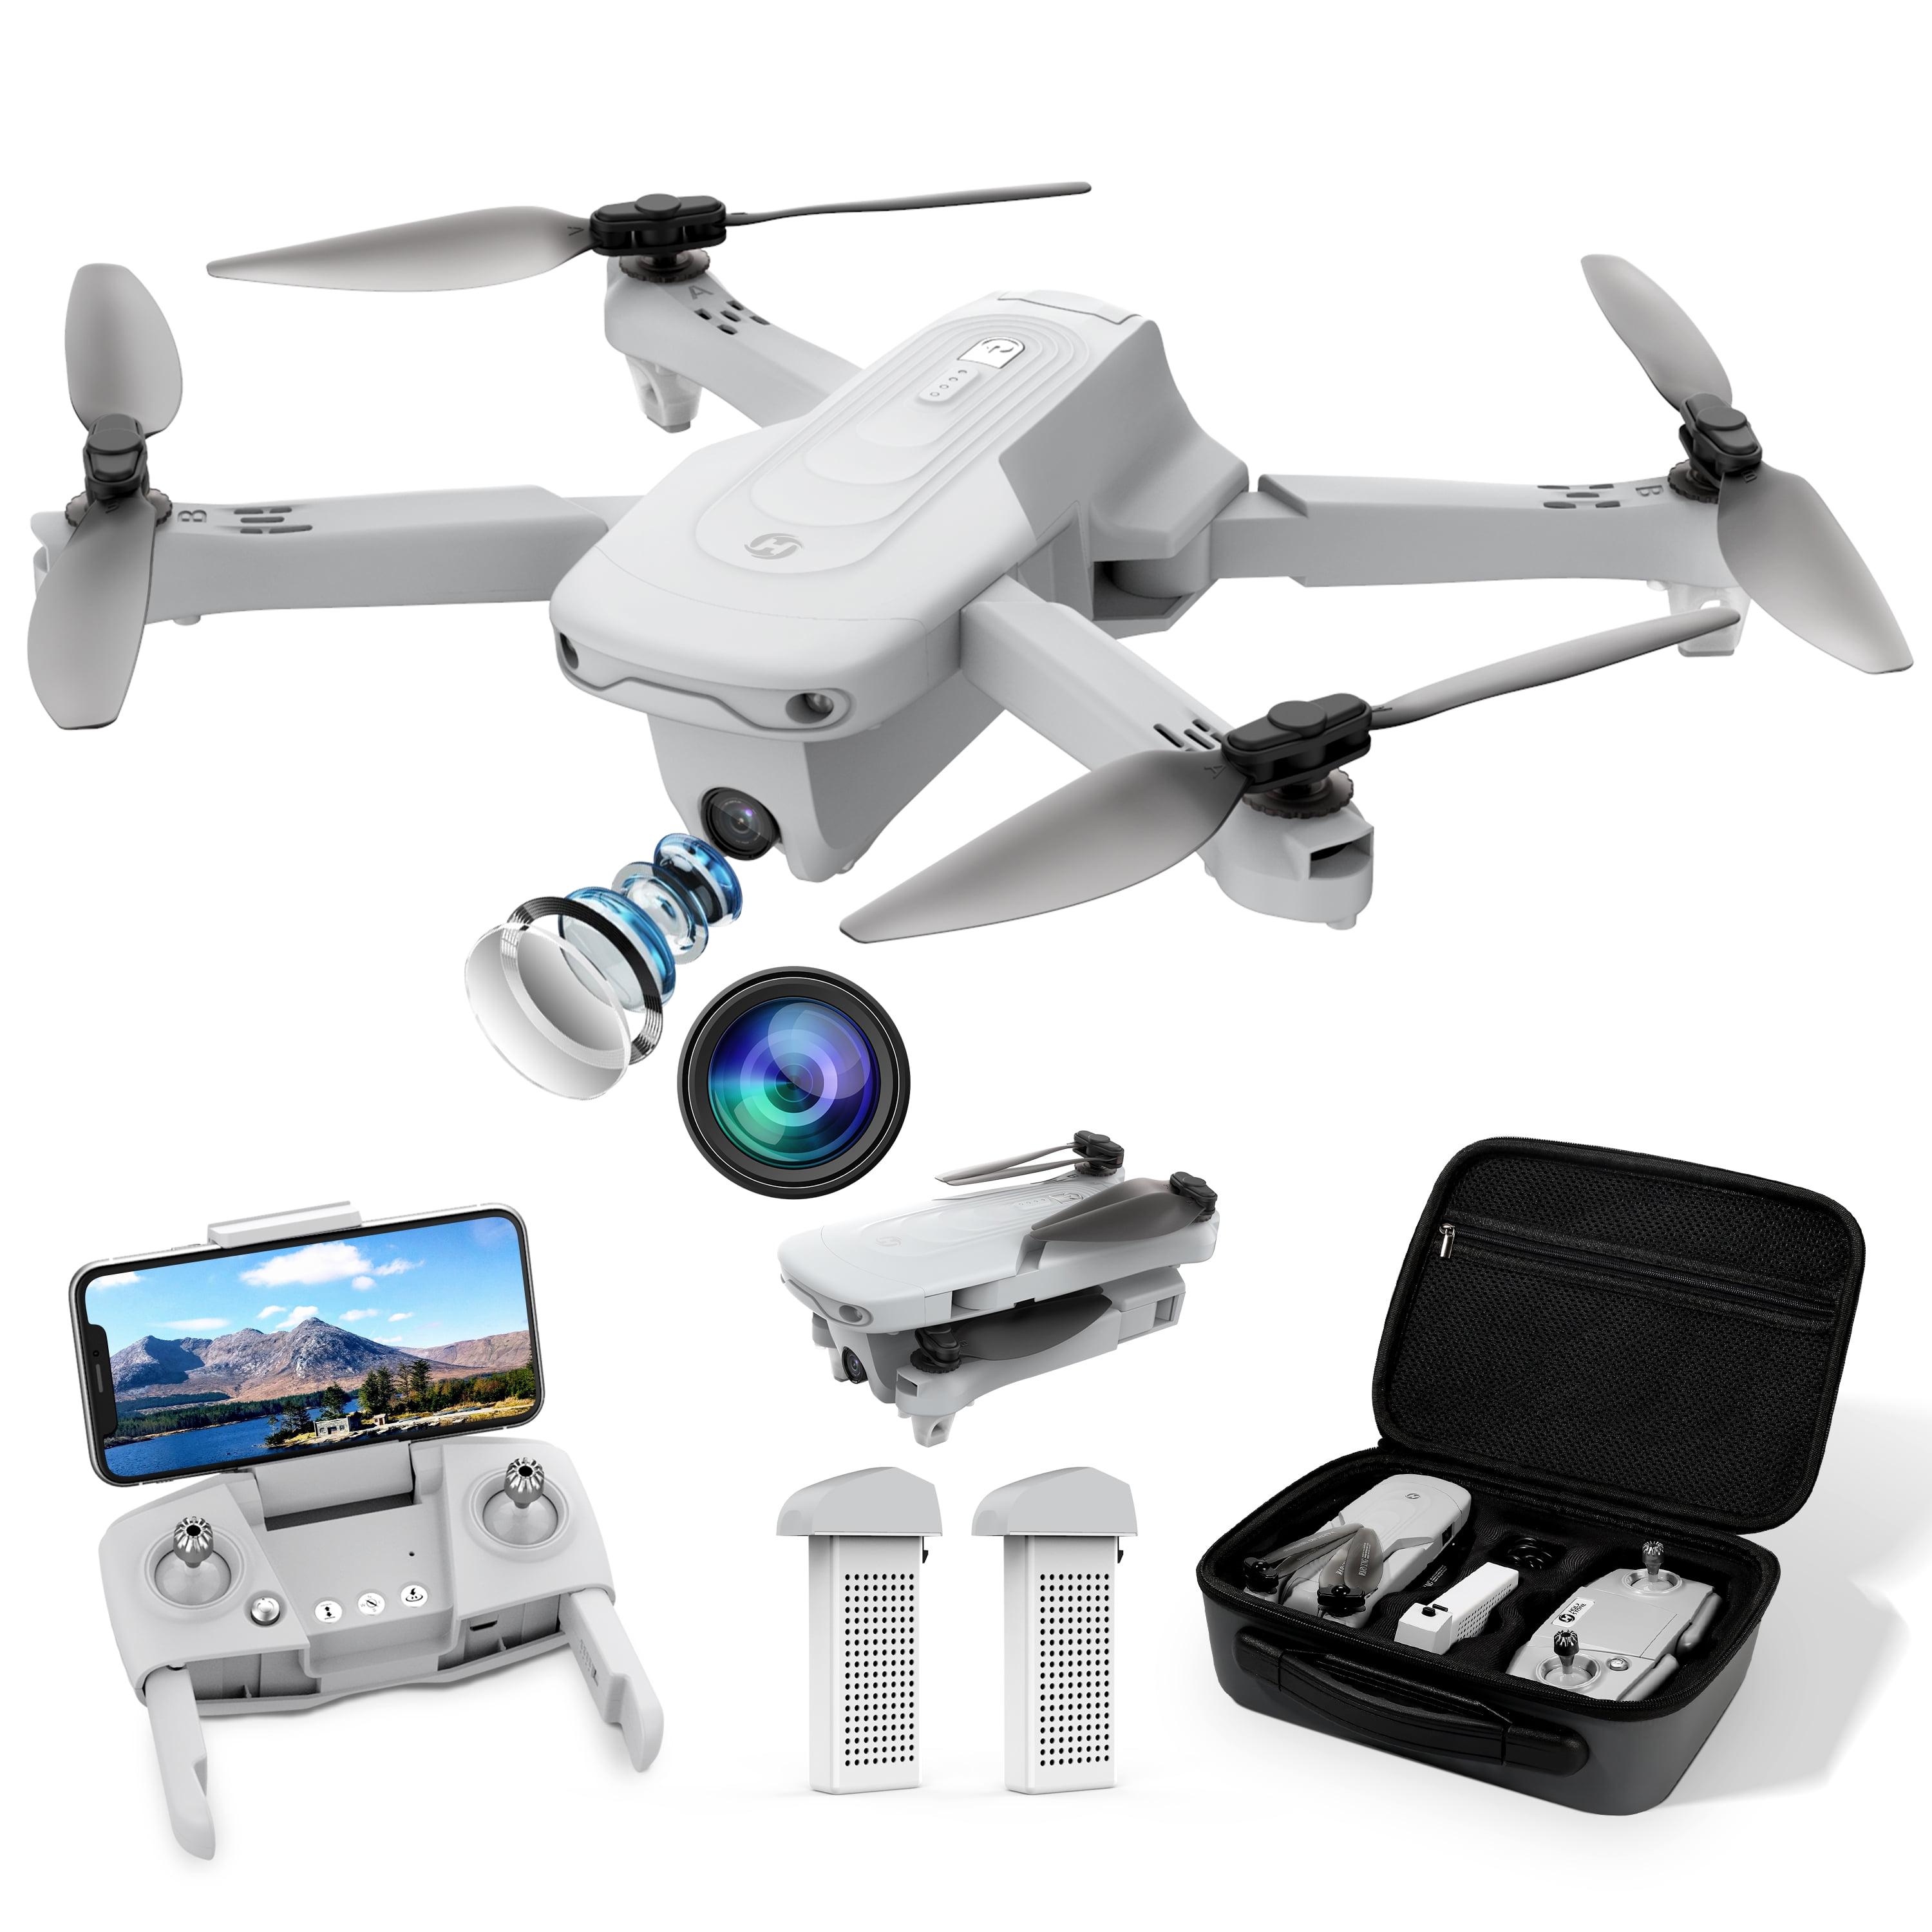  DJI Mavic Mini Drone FlyCam Quadcopter UAV with 2.7K Camera -  Gray (Renewed) : Toys & Games